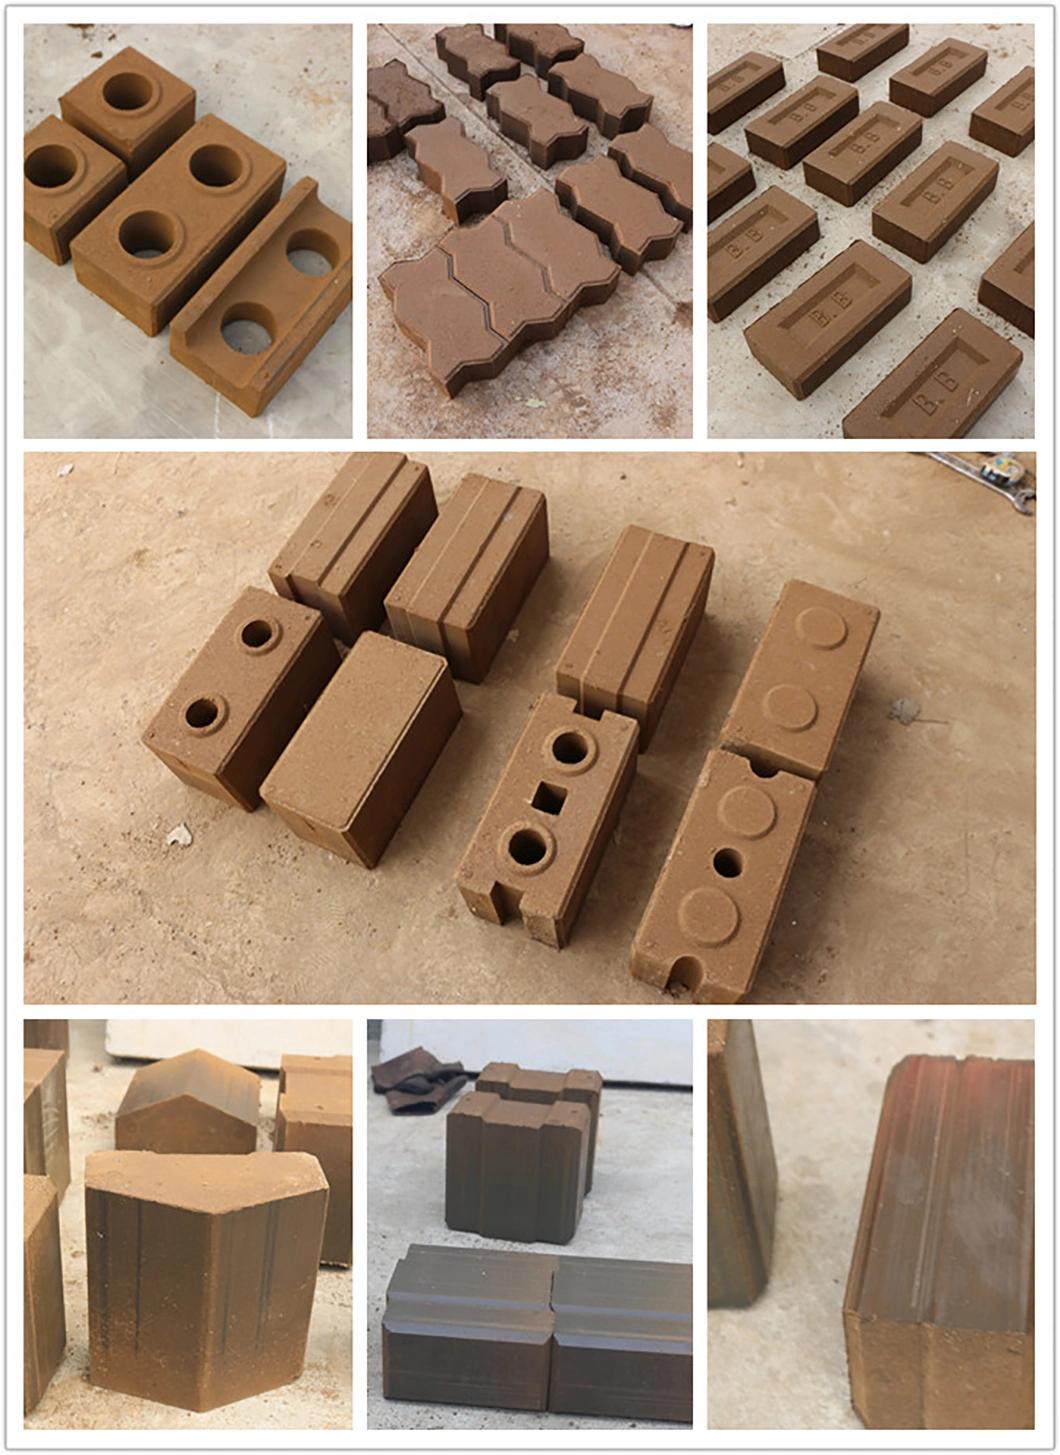 Shm4-10 Automatic Clay Interlocking Block Brick Making Machine